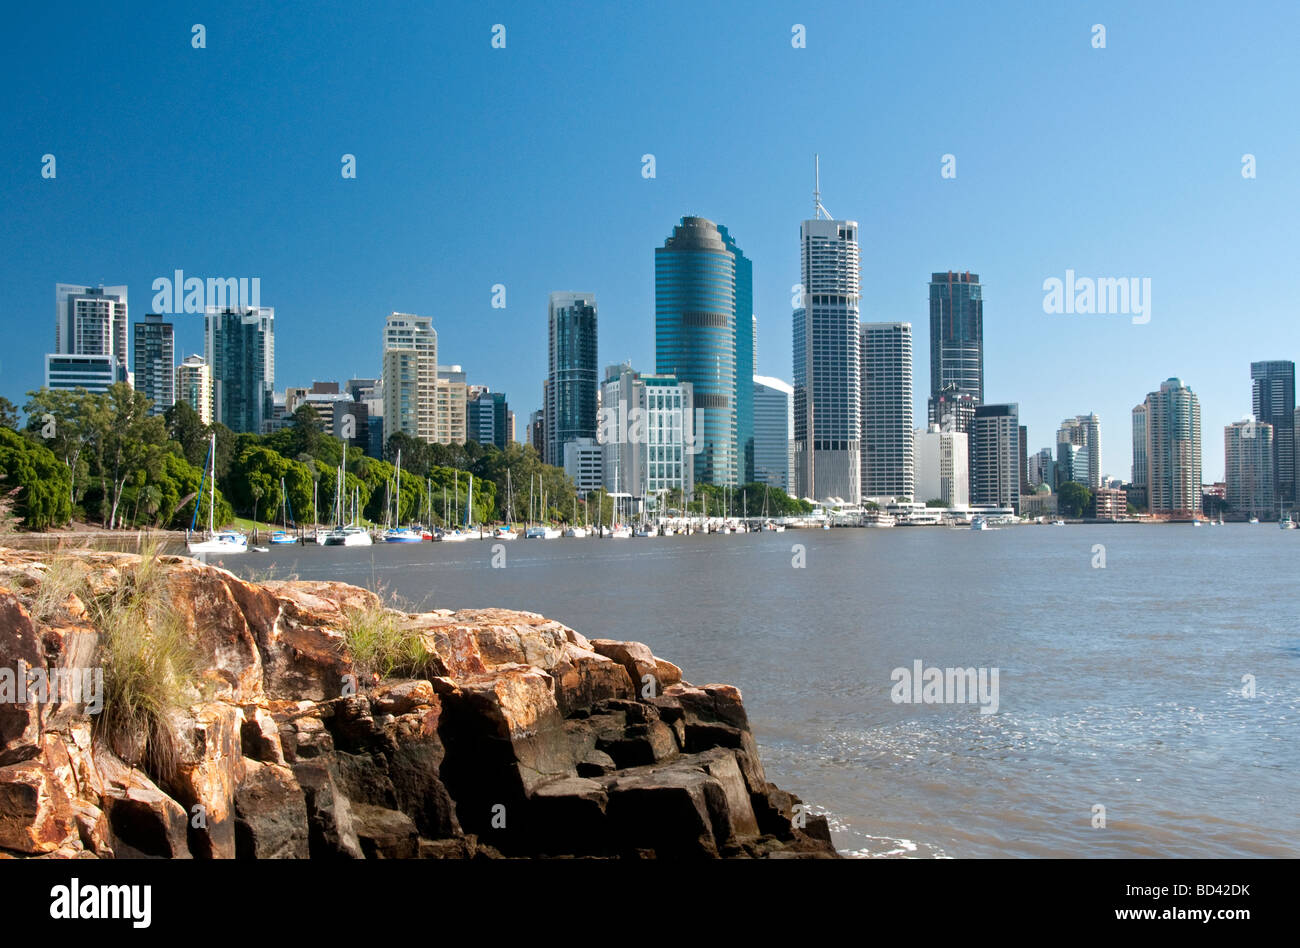 The city of Brisbane in Australia Stock Photo